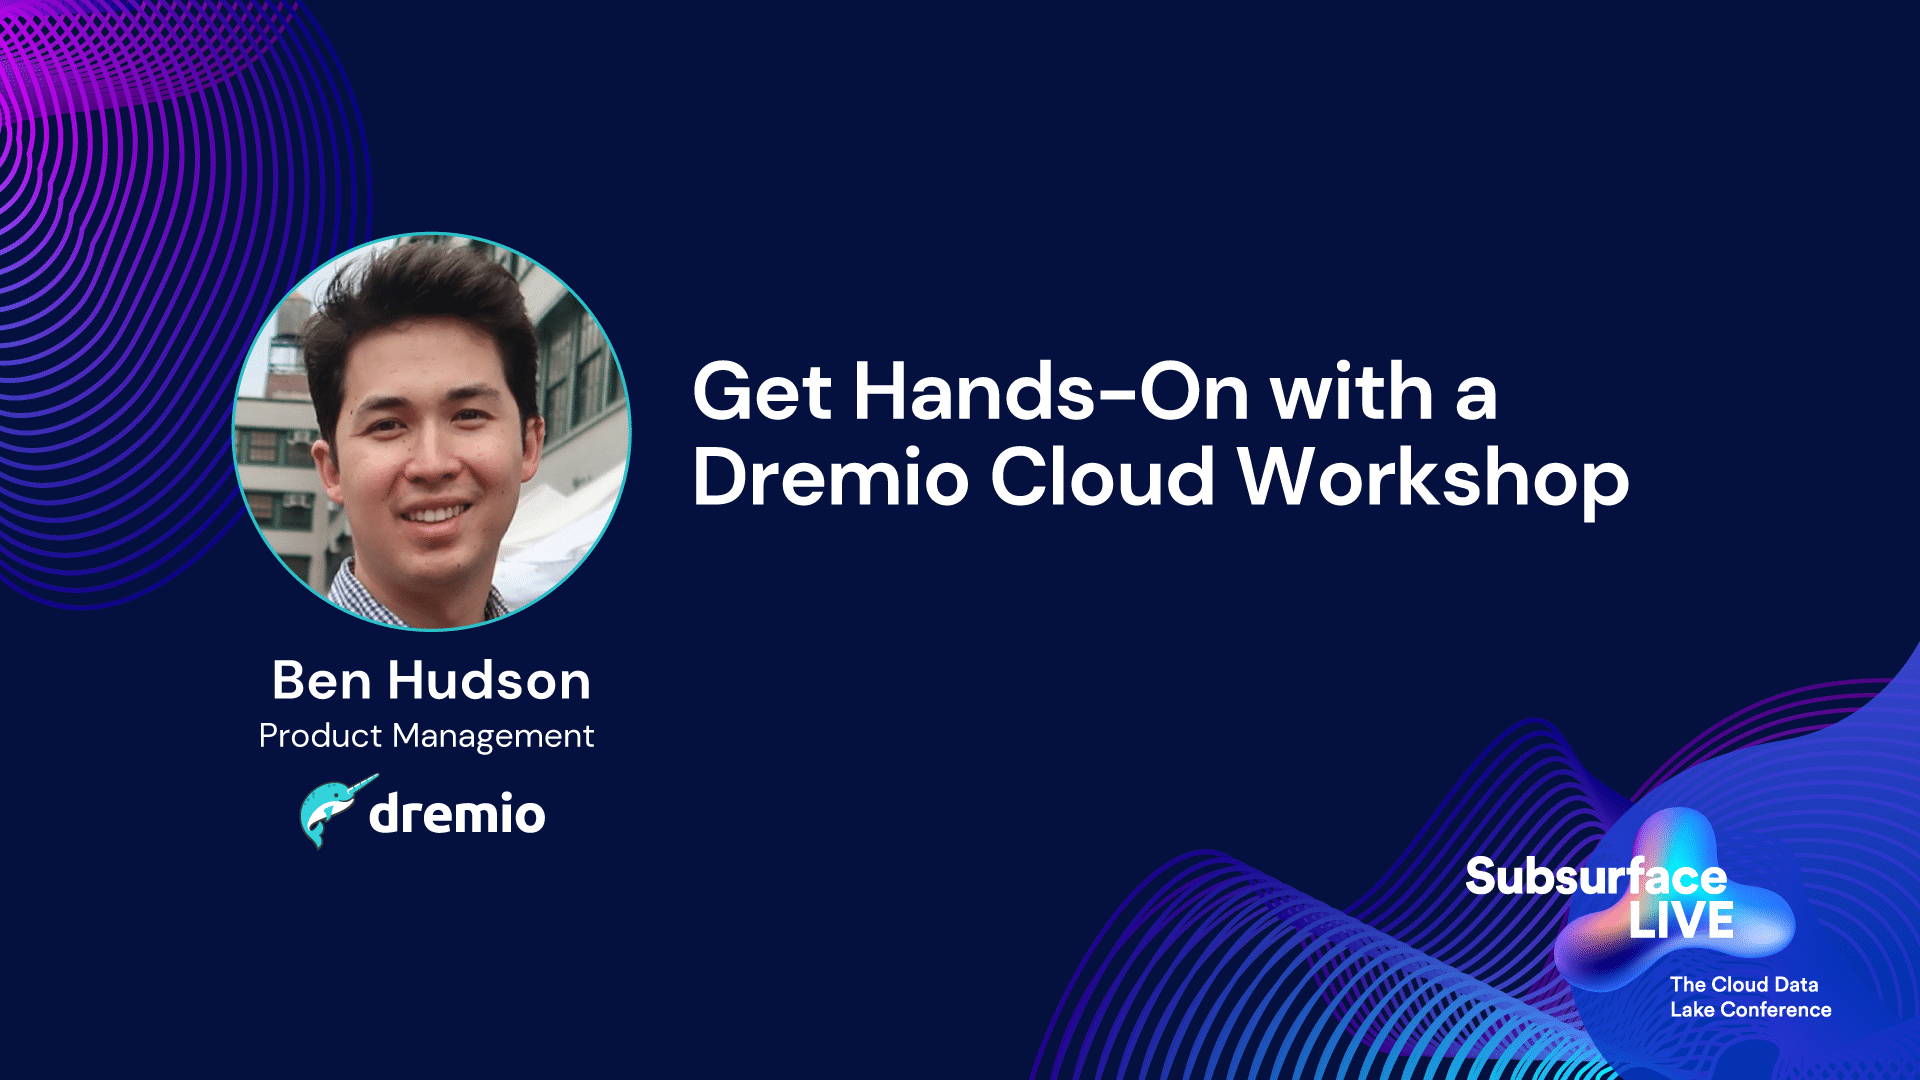 Get Hands-On with a Dremio Cloud Workshop